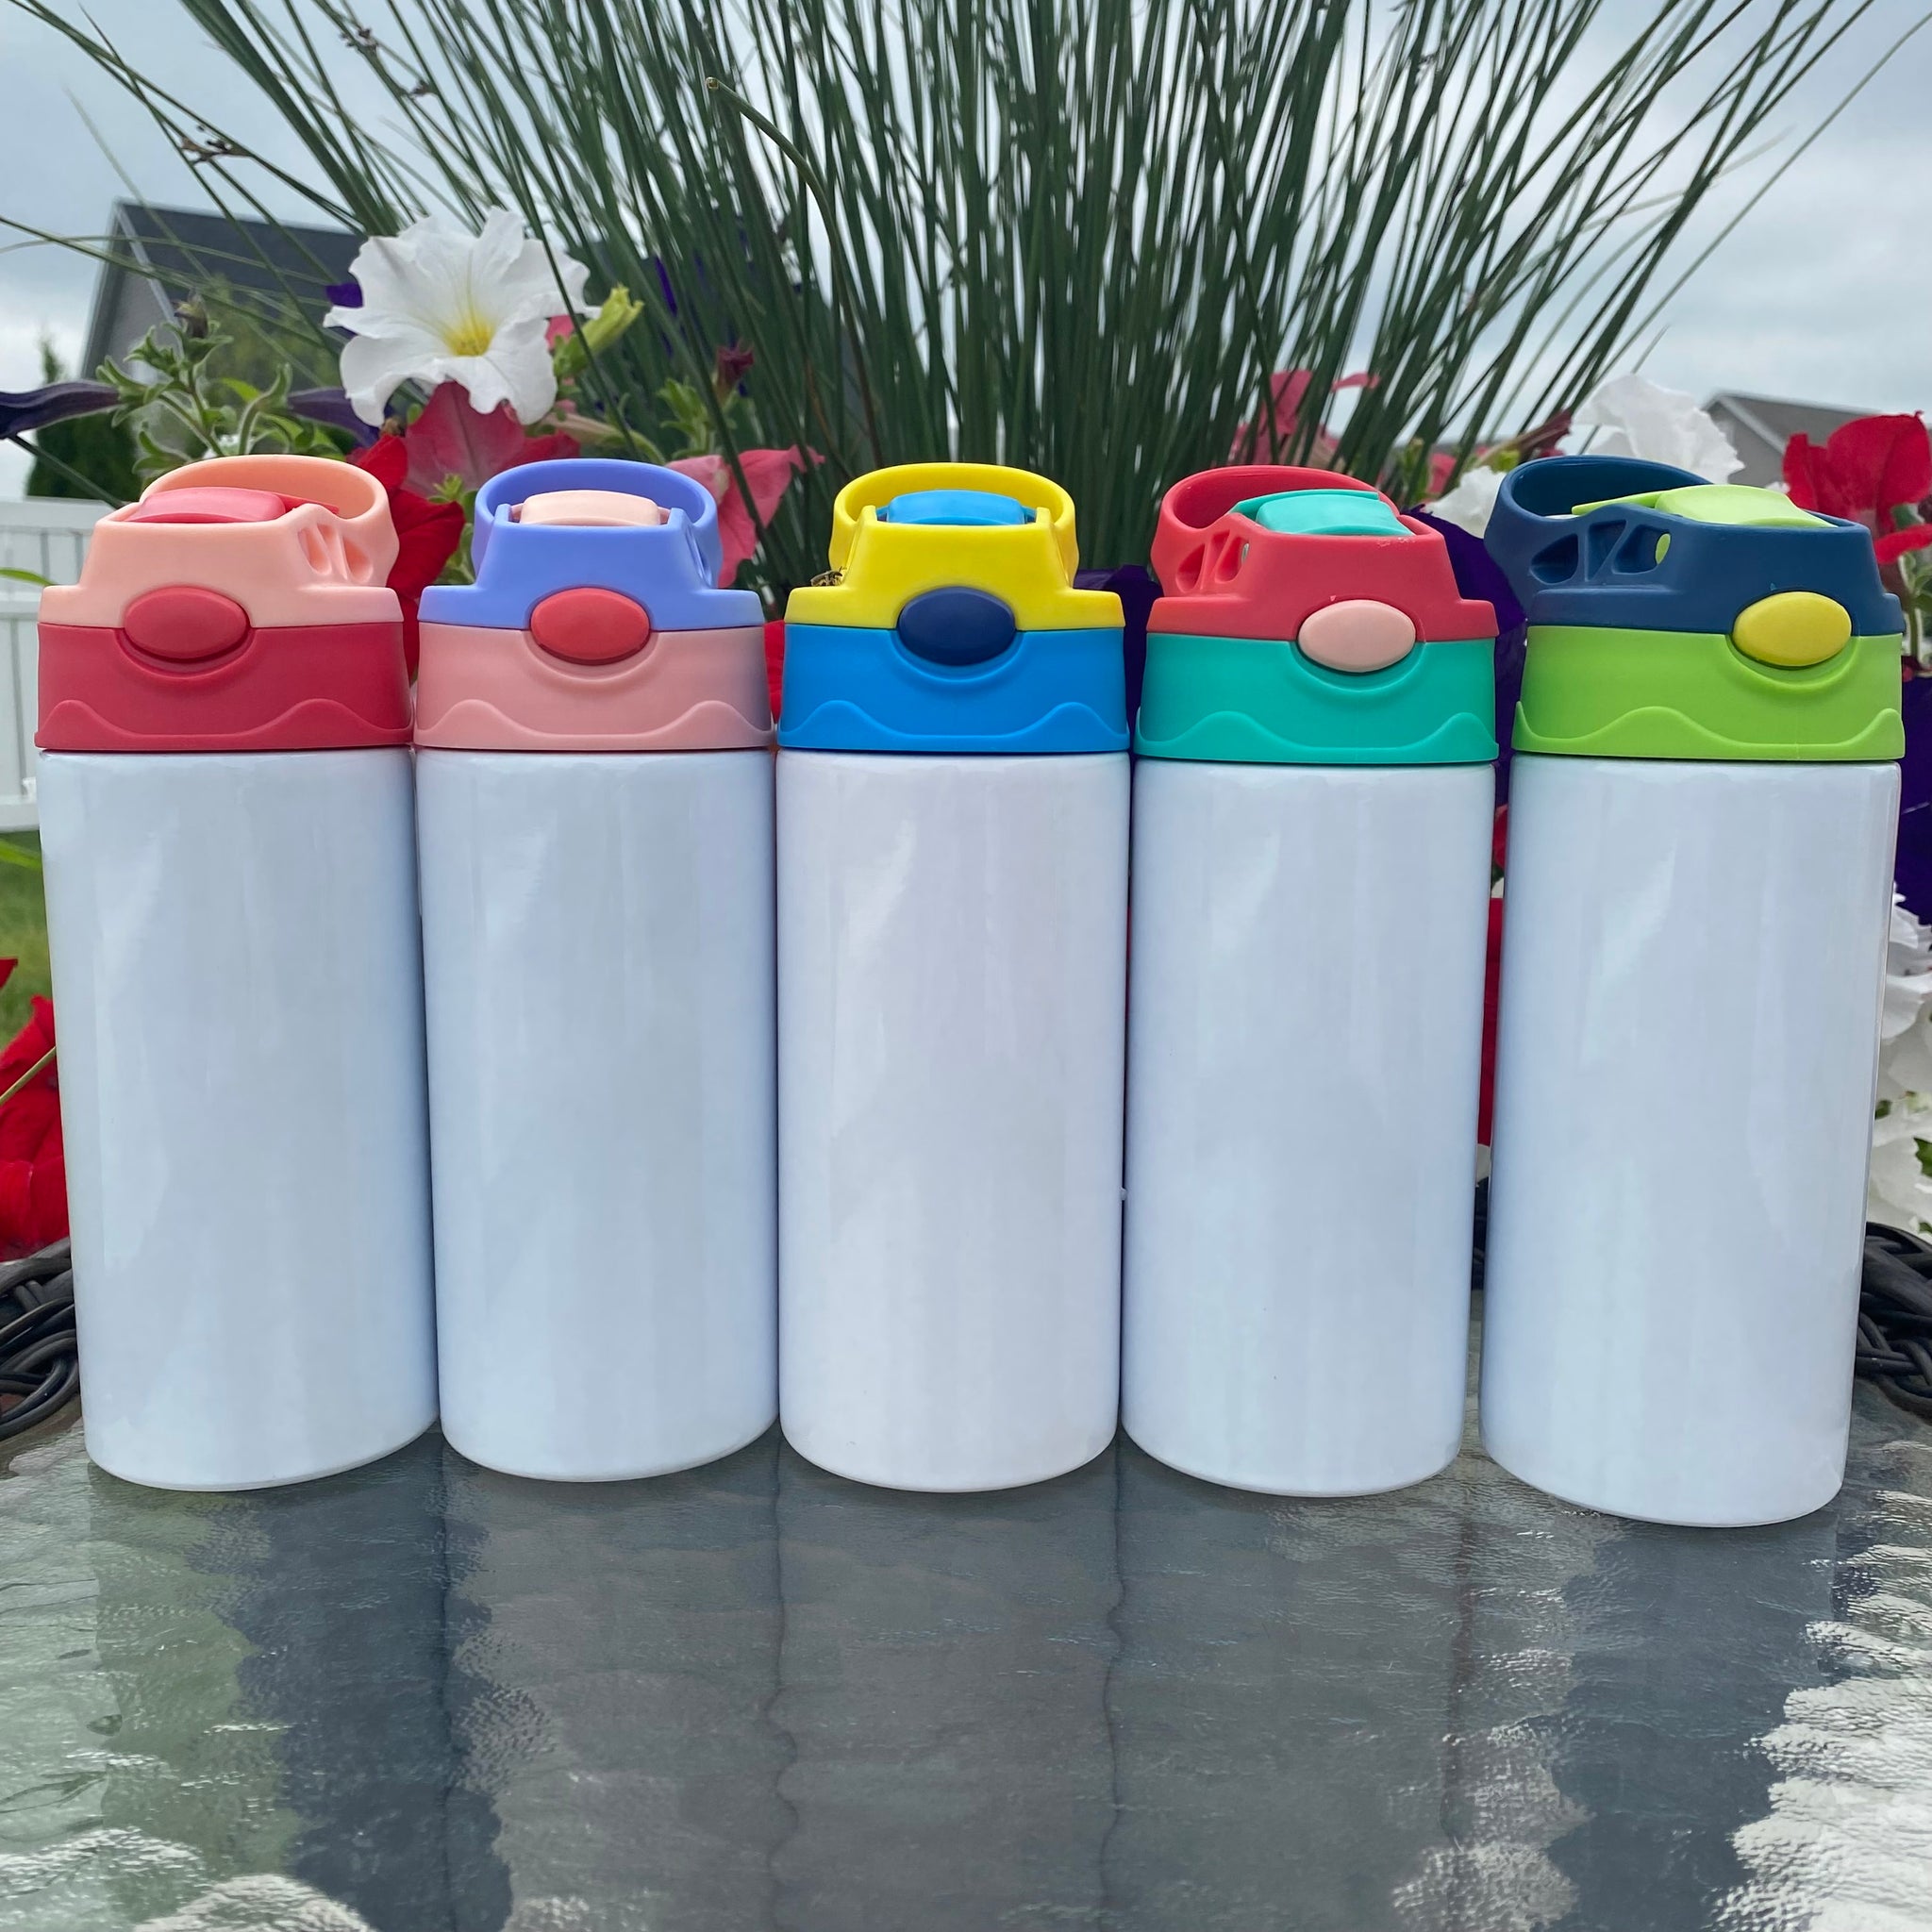 Mermaid Kids Flip Top Water Bottle Sublimation Design - Straight & Tapered  - 12 Oz Flip Top Design - Flip Top Sippy Cup PNG - 300 DPI